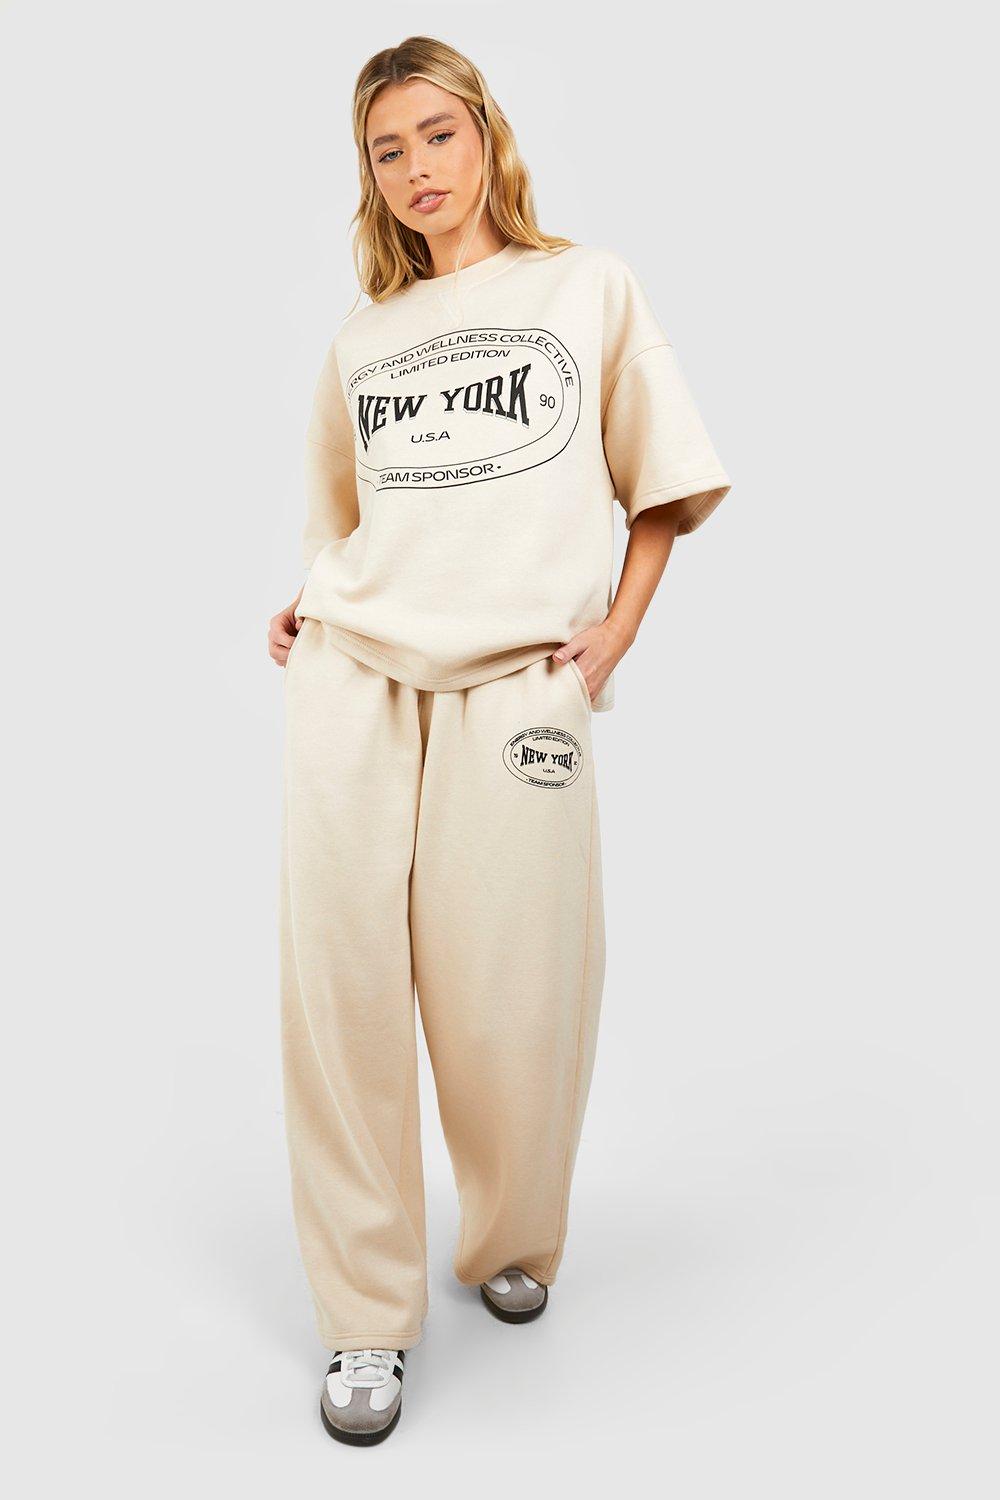 womens new york slogan double waistband straigh leg jogger - beige - m, beige